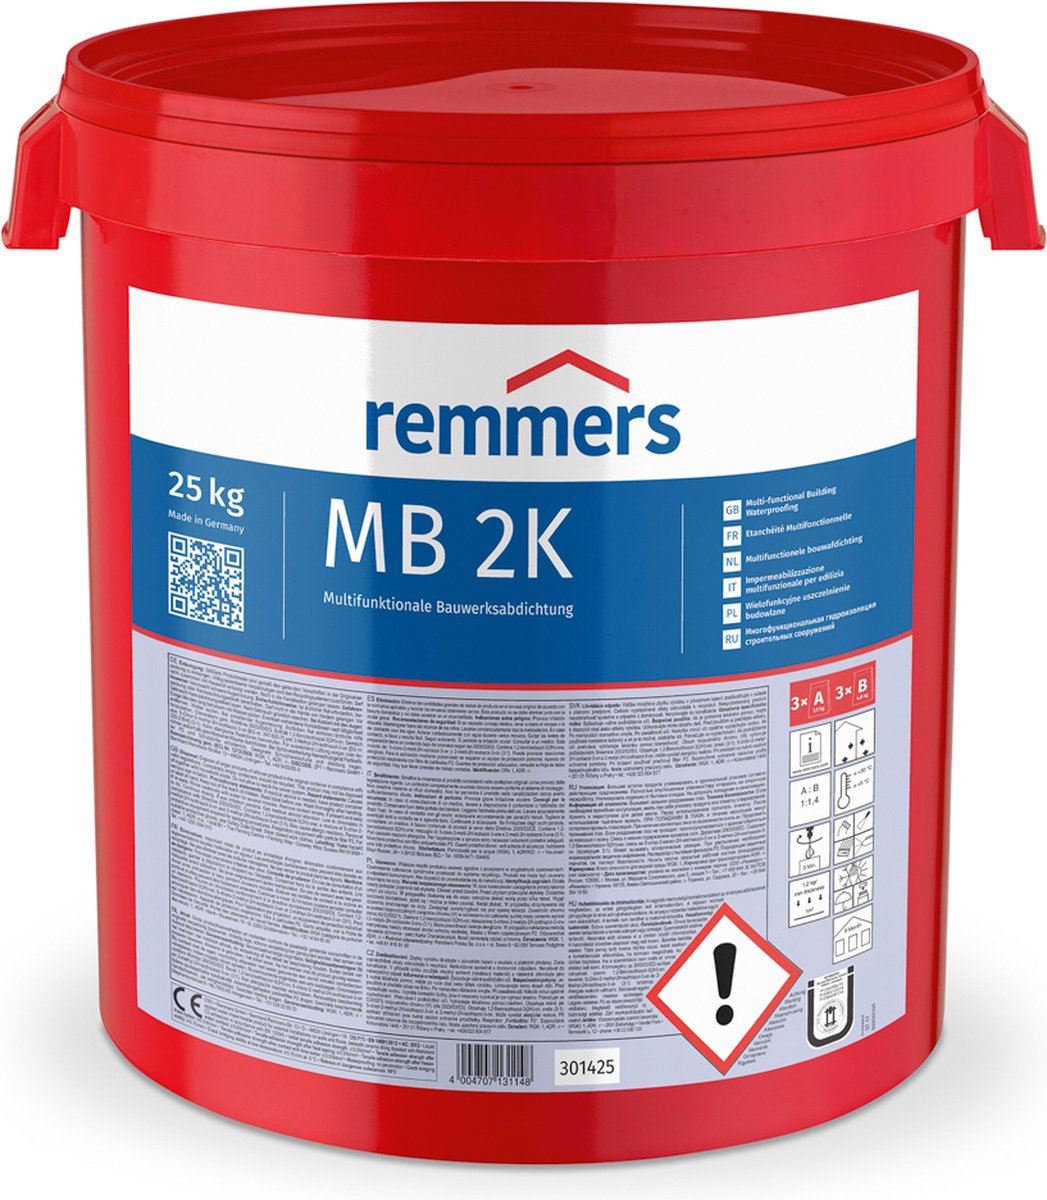 REMMERS MB 2K 8.3kg (Multi-Baudicht, kelderdichting, vocht- en zout blokkerend) - Remmers Bouwchemie